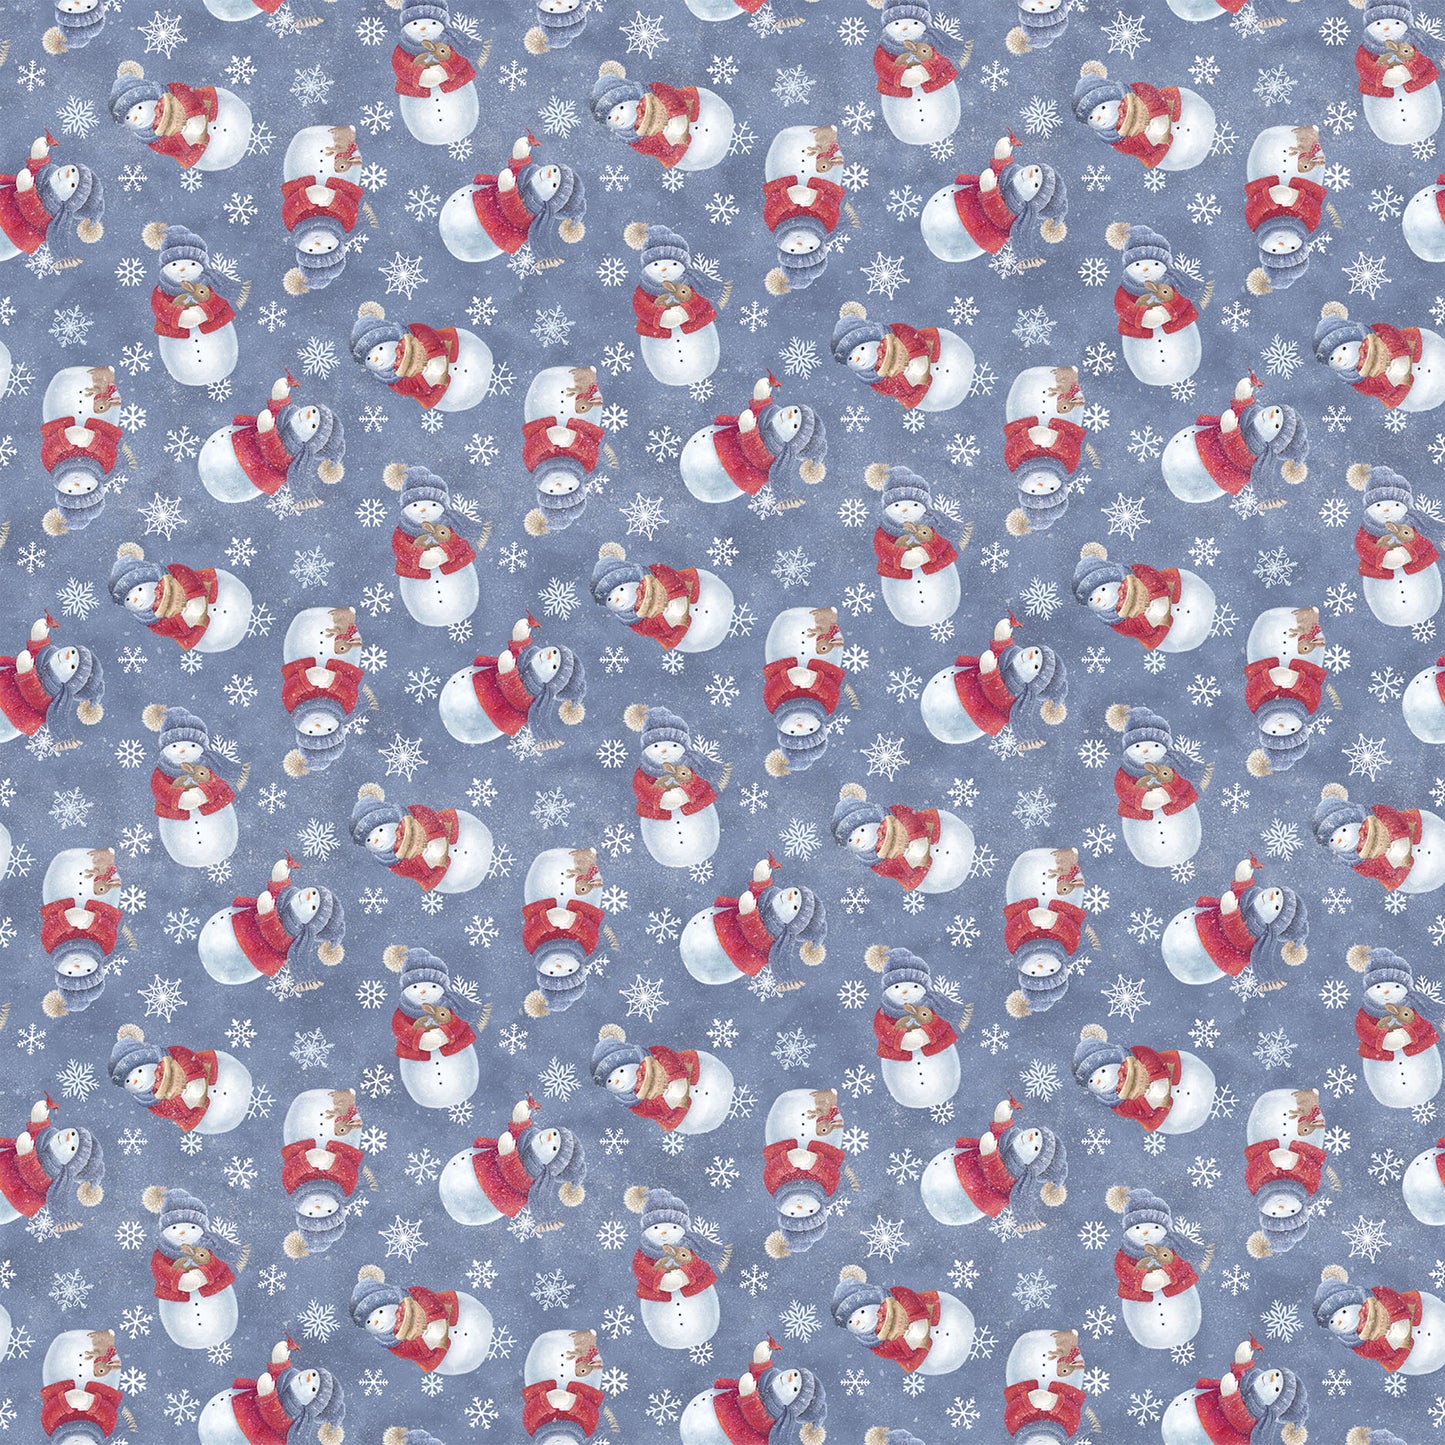 Snowman Toss - Little Donkey's Christmas Cotton Flannel Fabric - per half metre